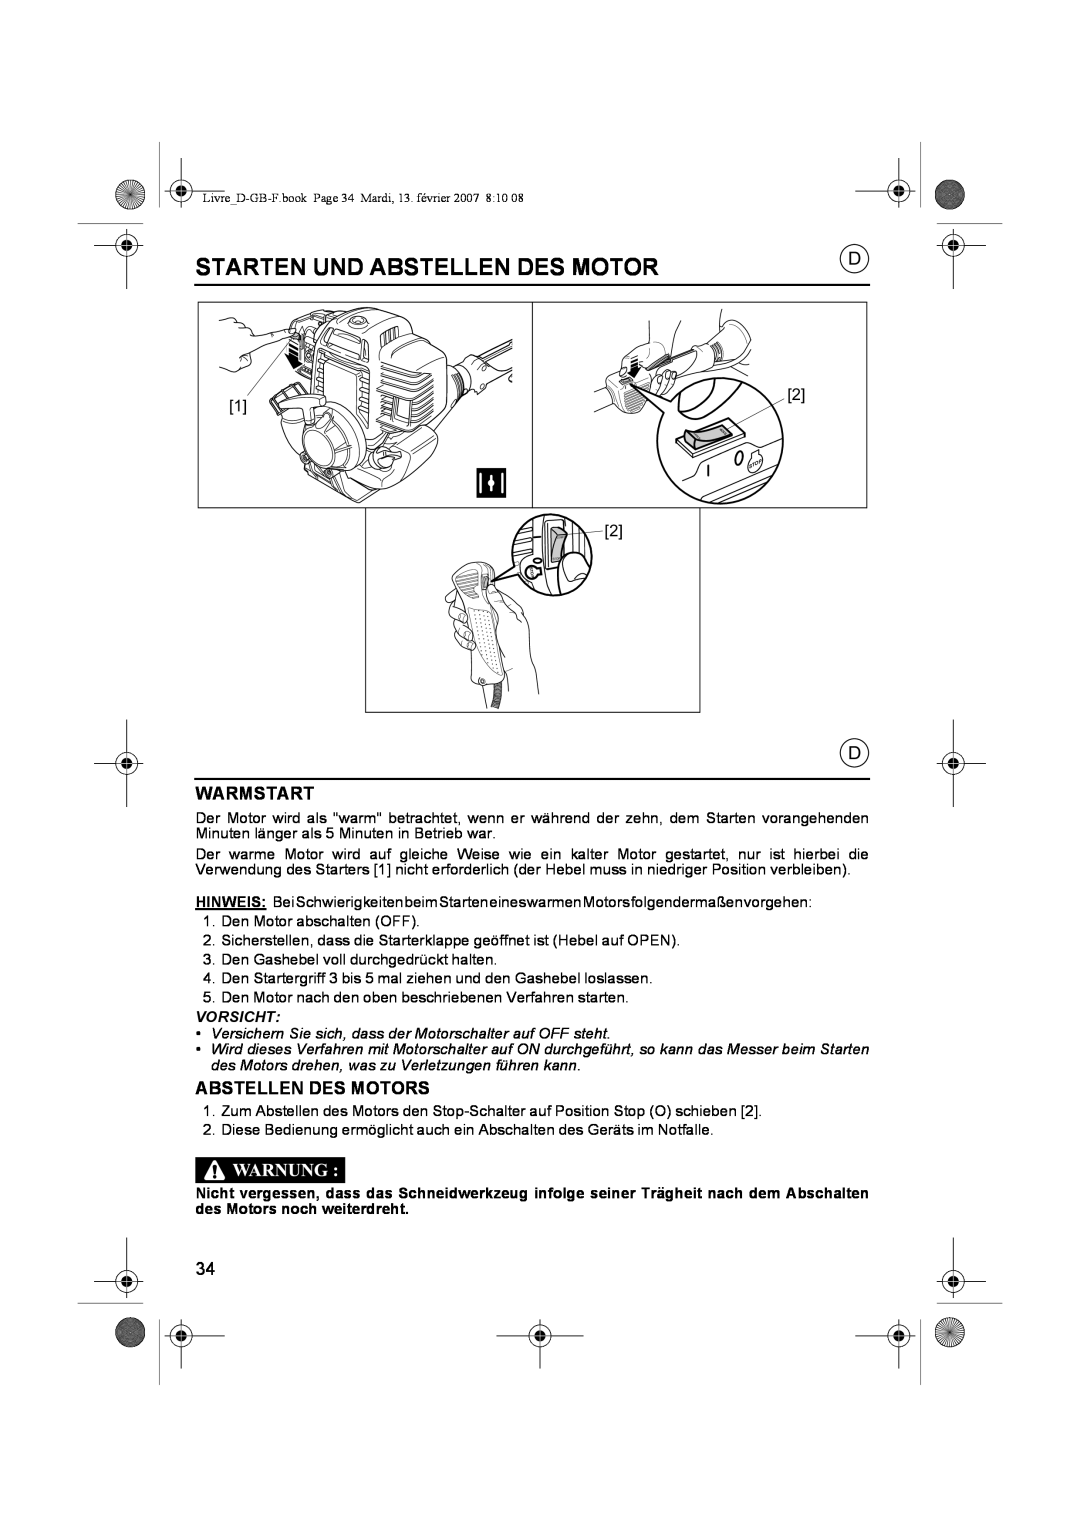 Honda Power Equipment UMK435E owner manual Starten Und Abstellen Des Motor, Warmstart, Abstellen Des Motors 